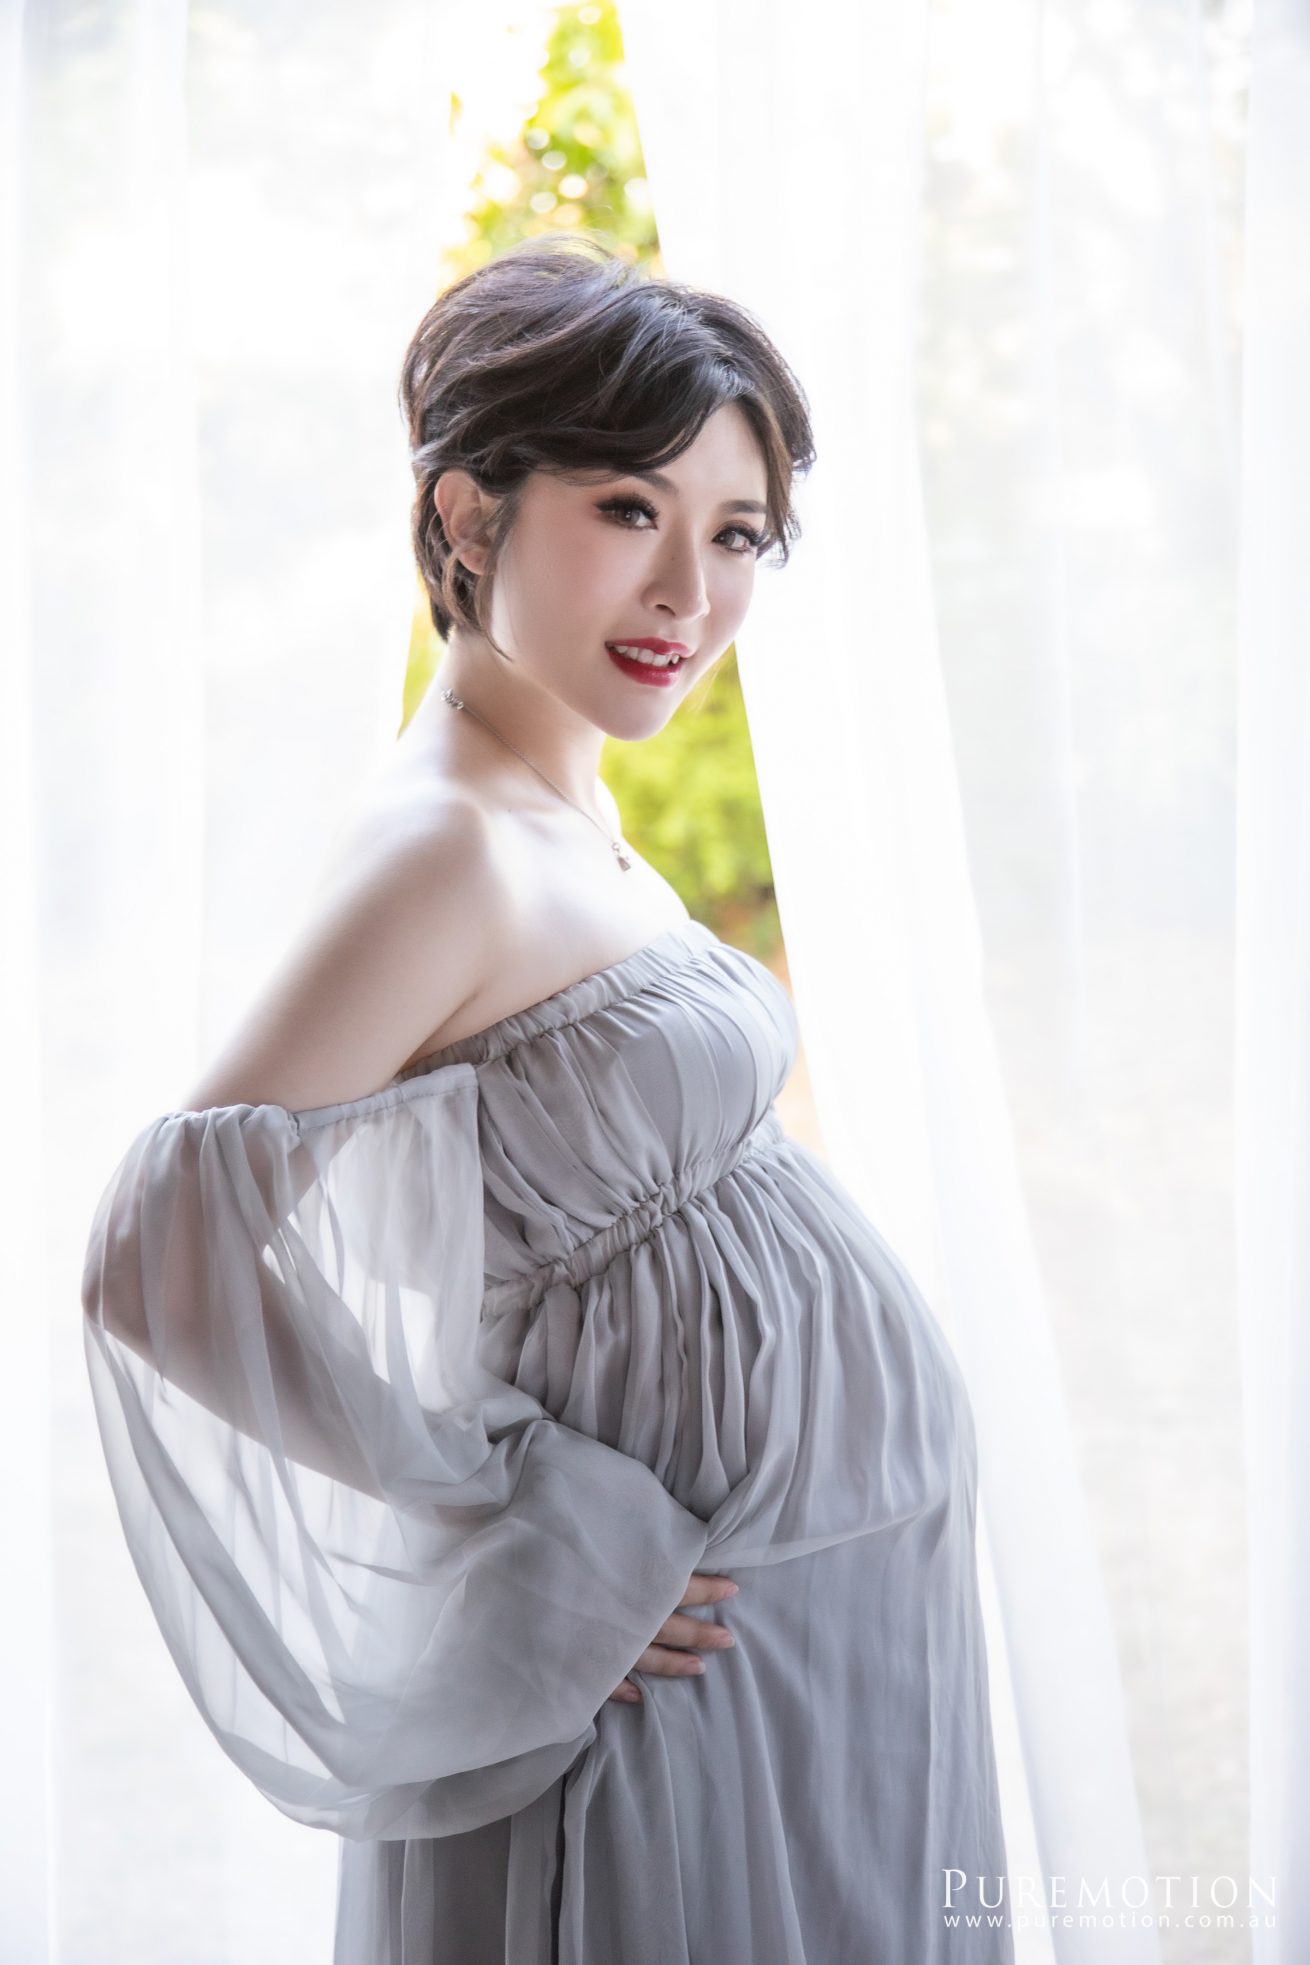 191206 Puremotion Maternity Portrait Photography Alex Huang Brisbane AnanMaternity-0009